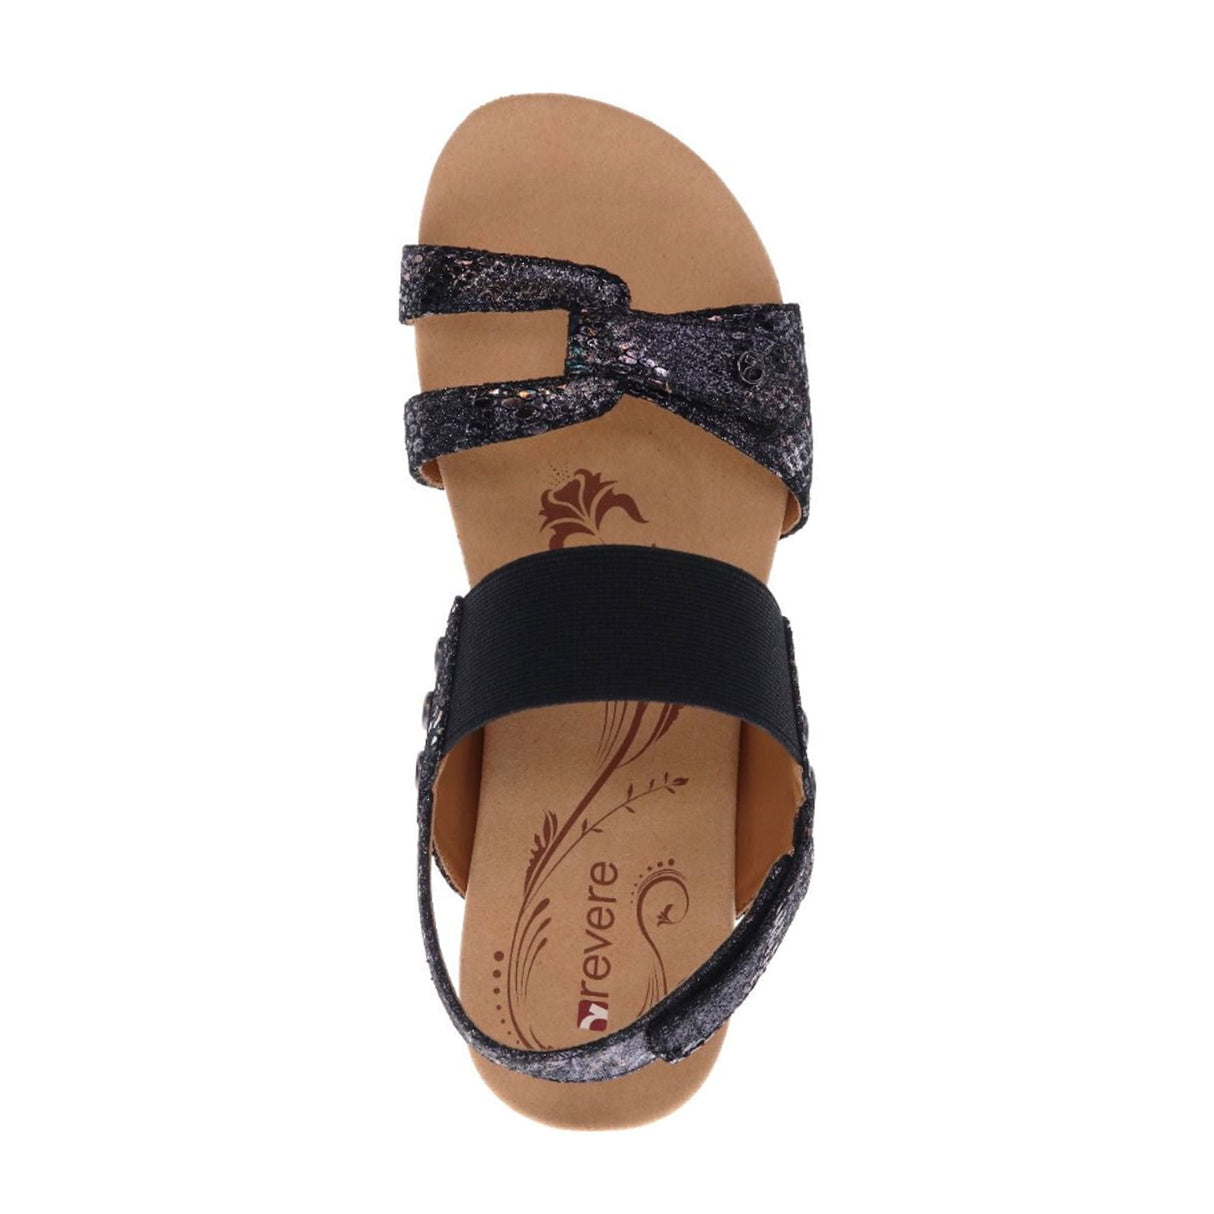 Revere Tahiti Wedge Sandal (Women) - Black Metallic Python Sandals - Heel/Wedge - The Heel Shoe Fitters